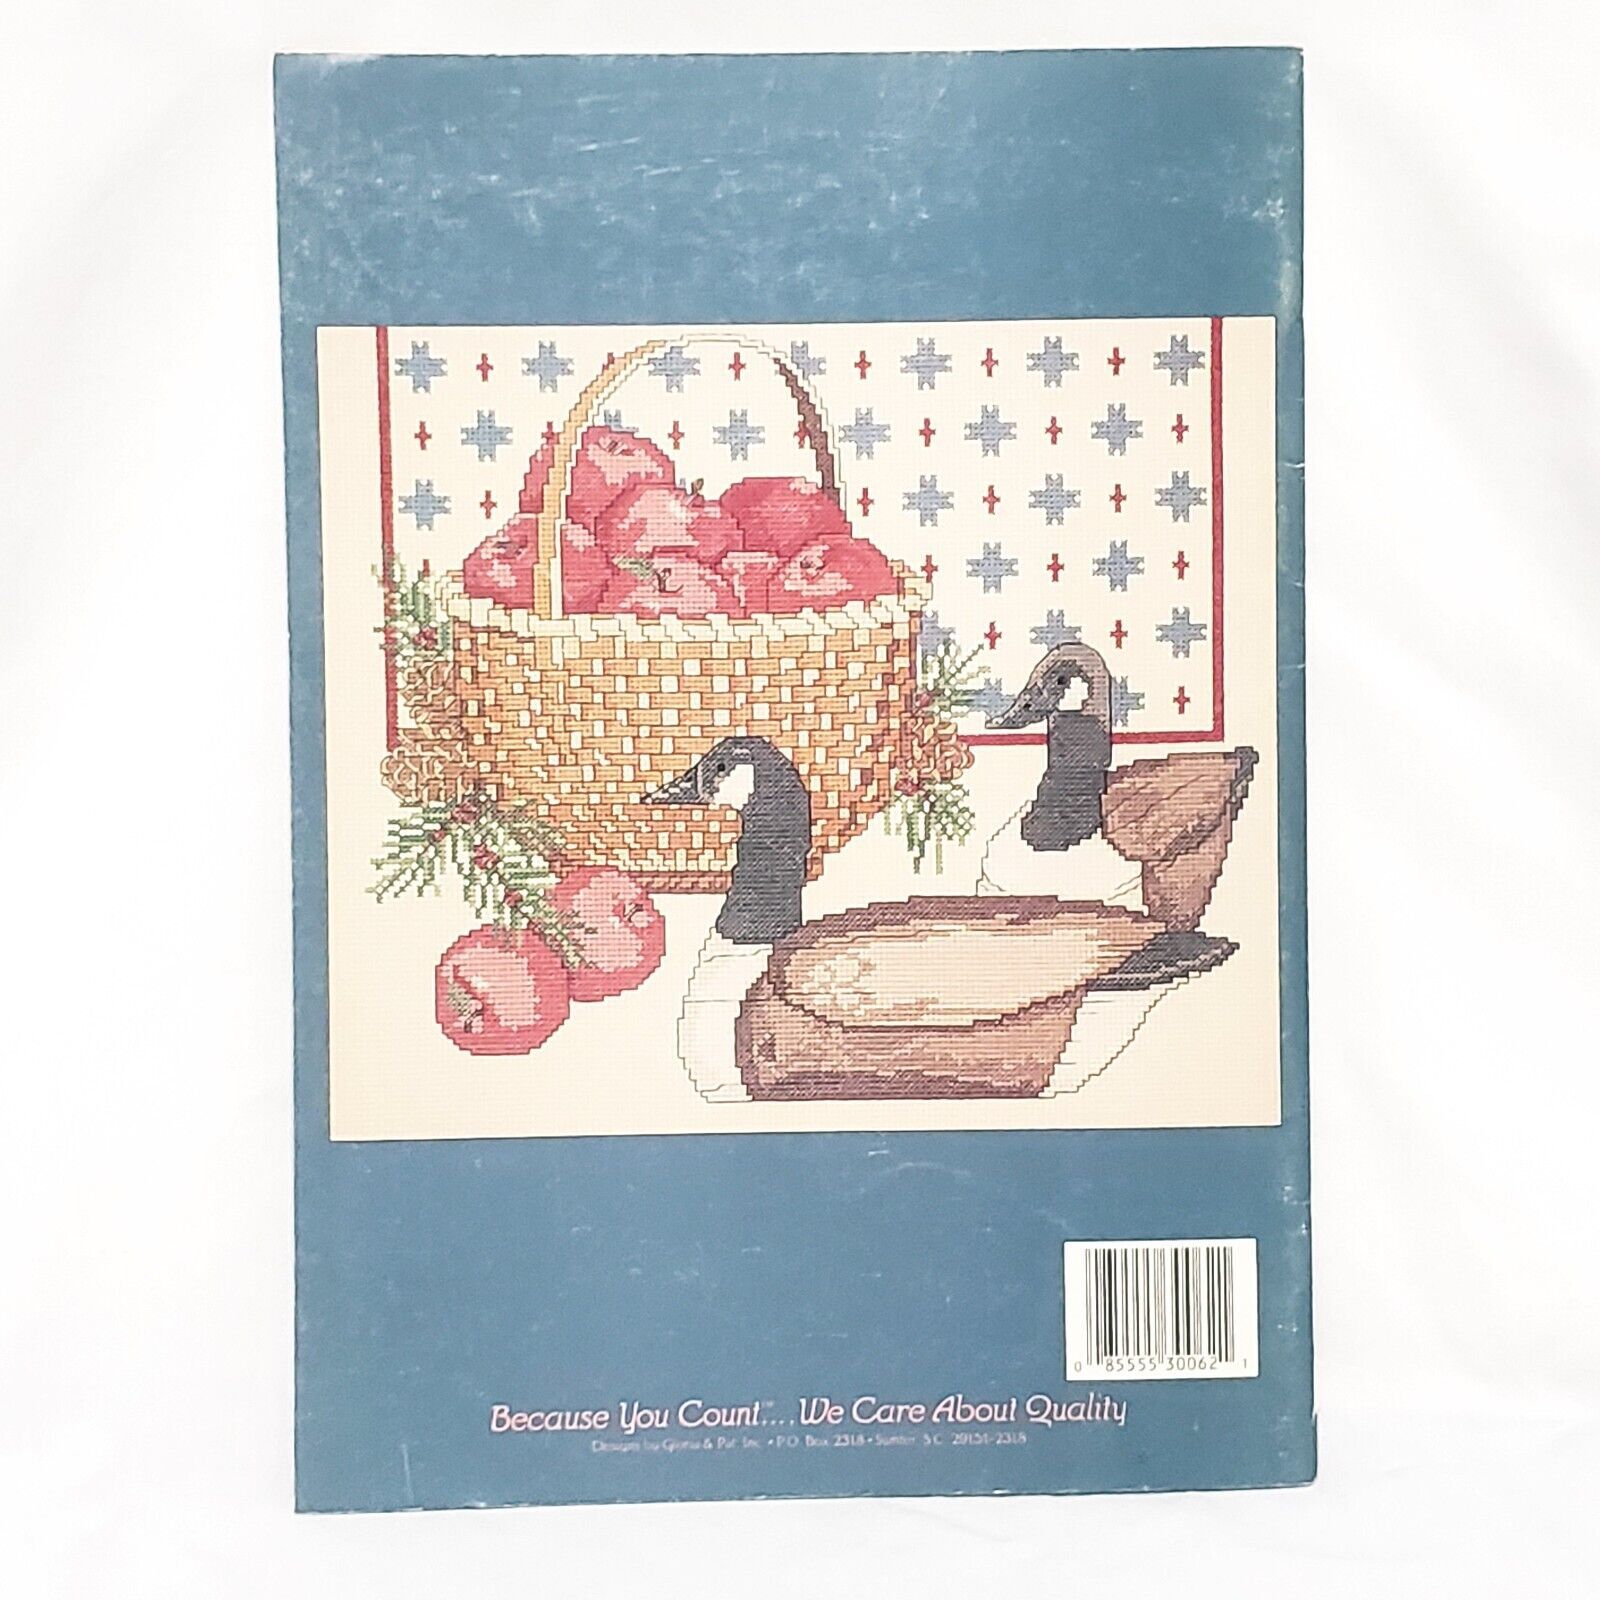 American Classics Leaflet 62 Gloria Pat Ducks Flowers Christmas 1988 Fruit - $14.84